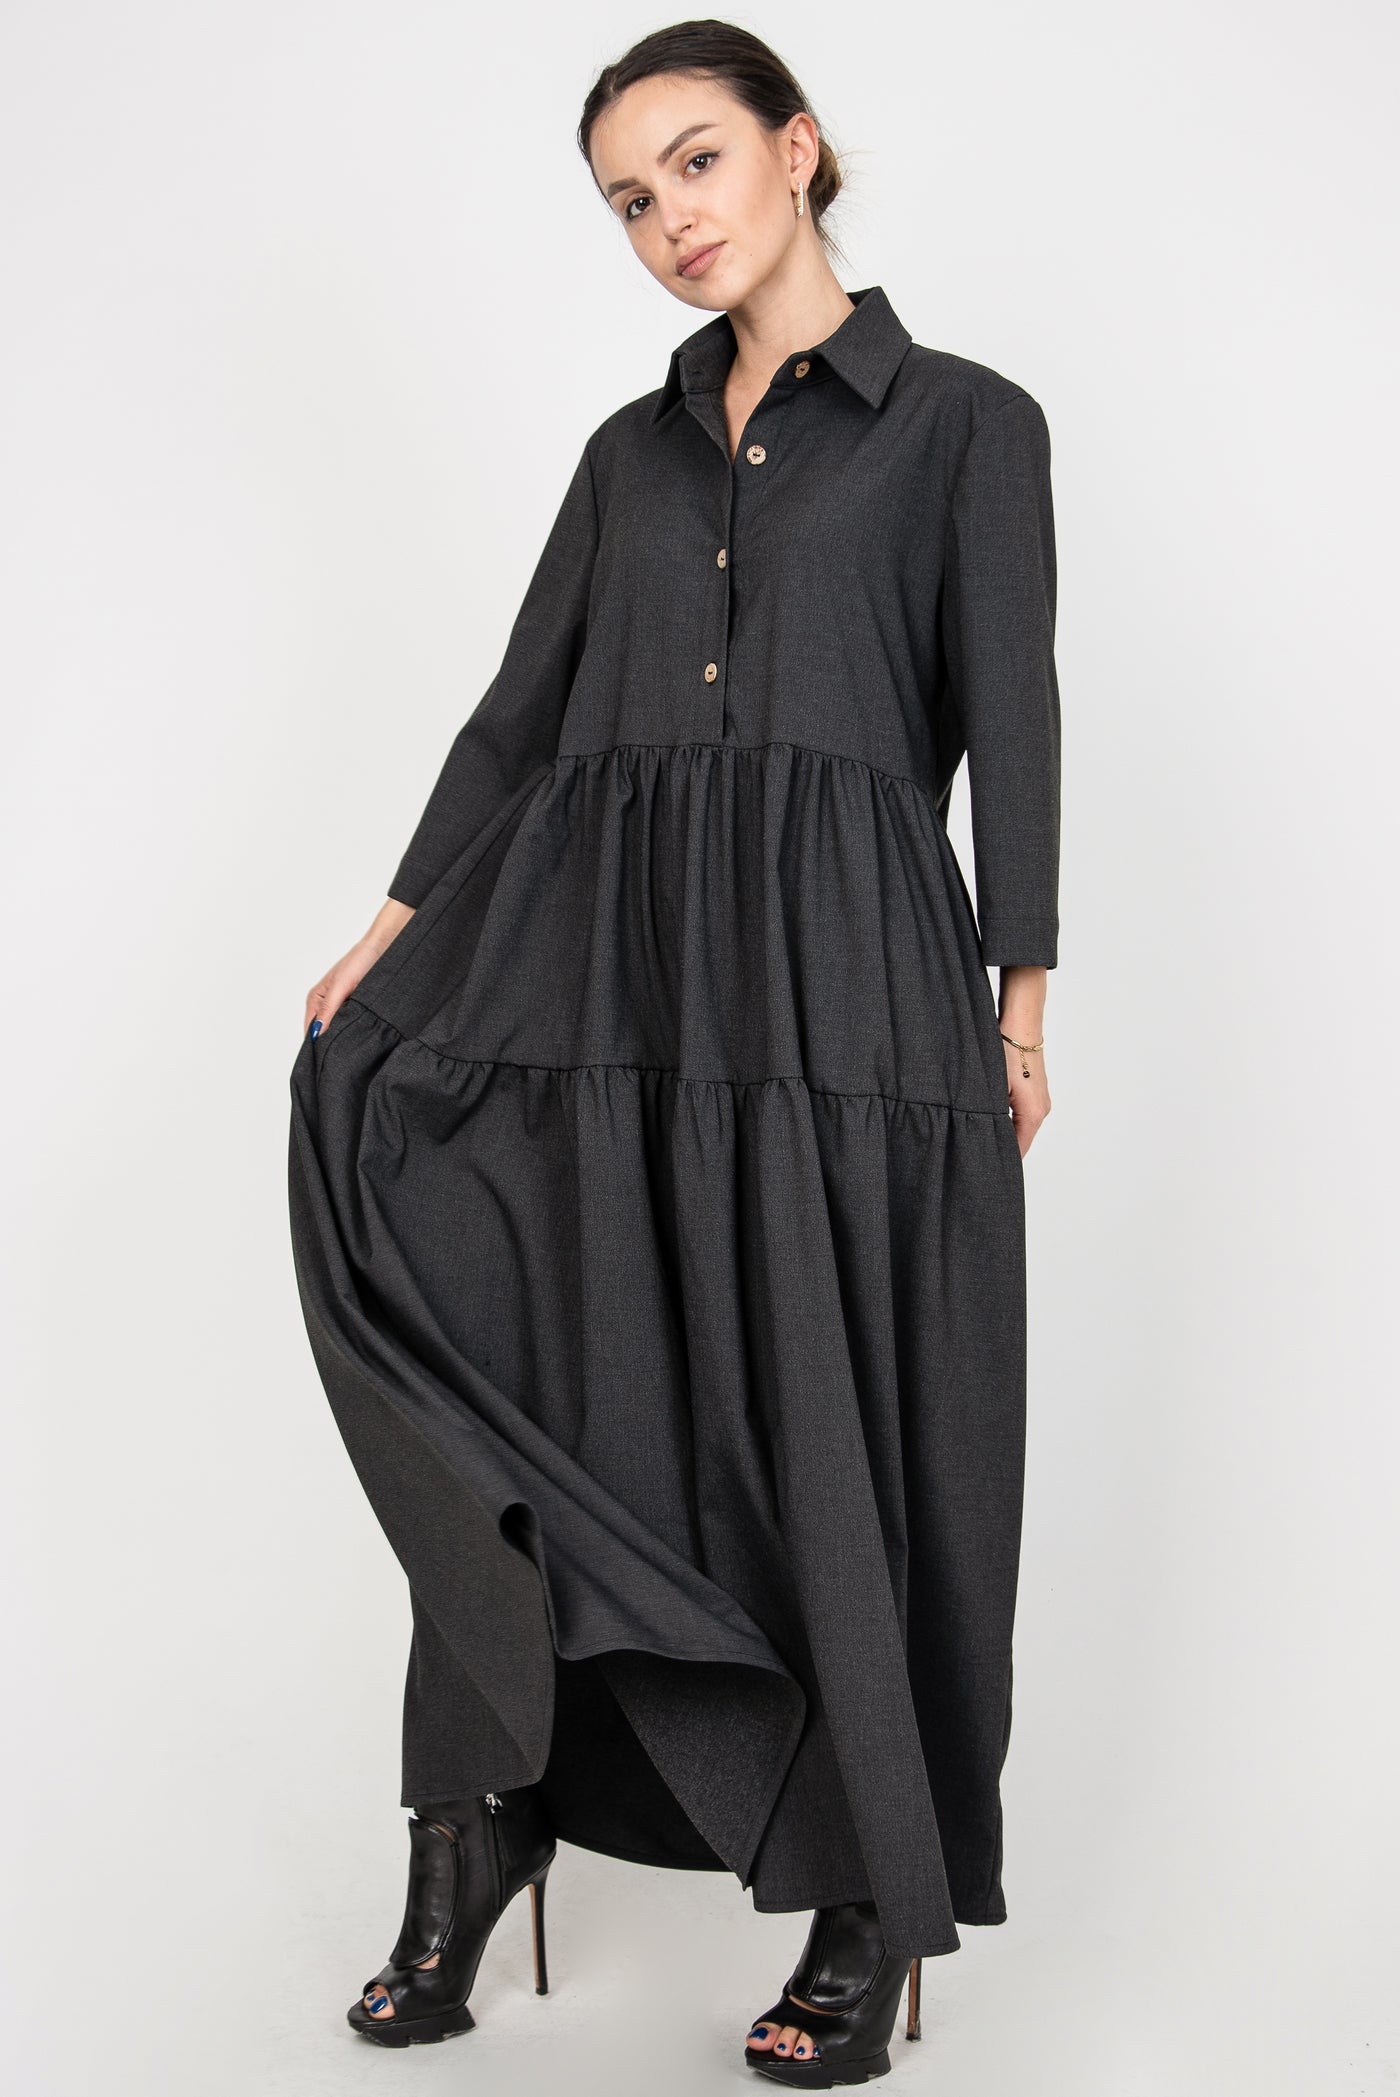 Black ruffle dress F2350